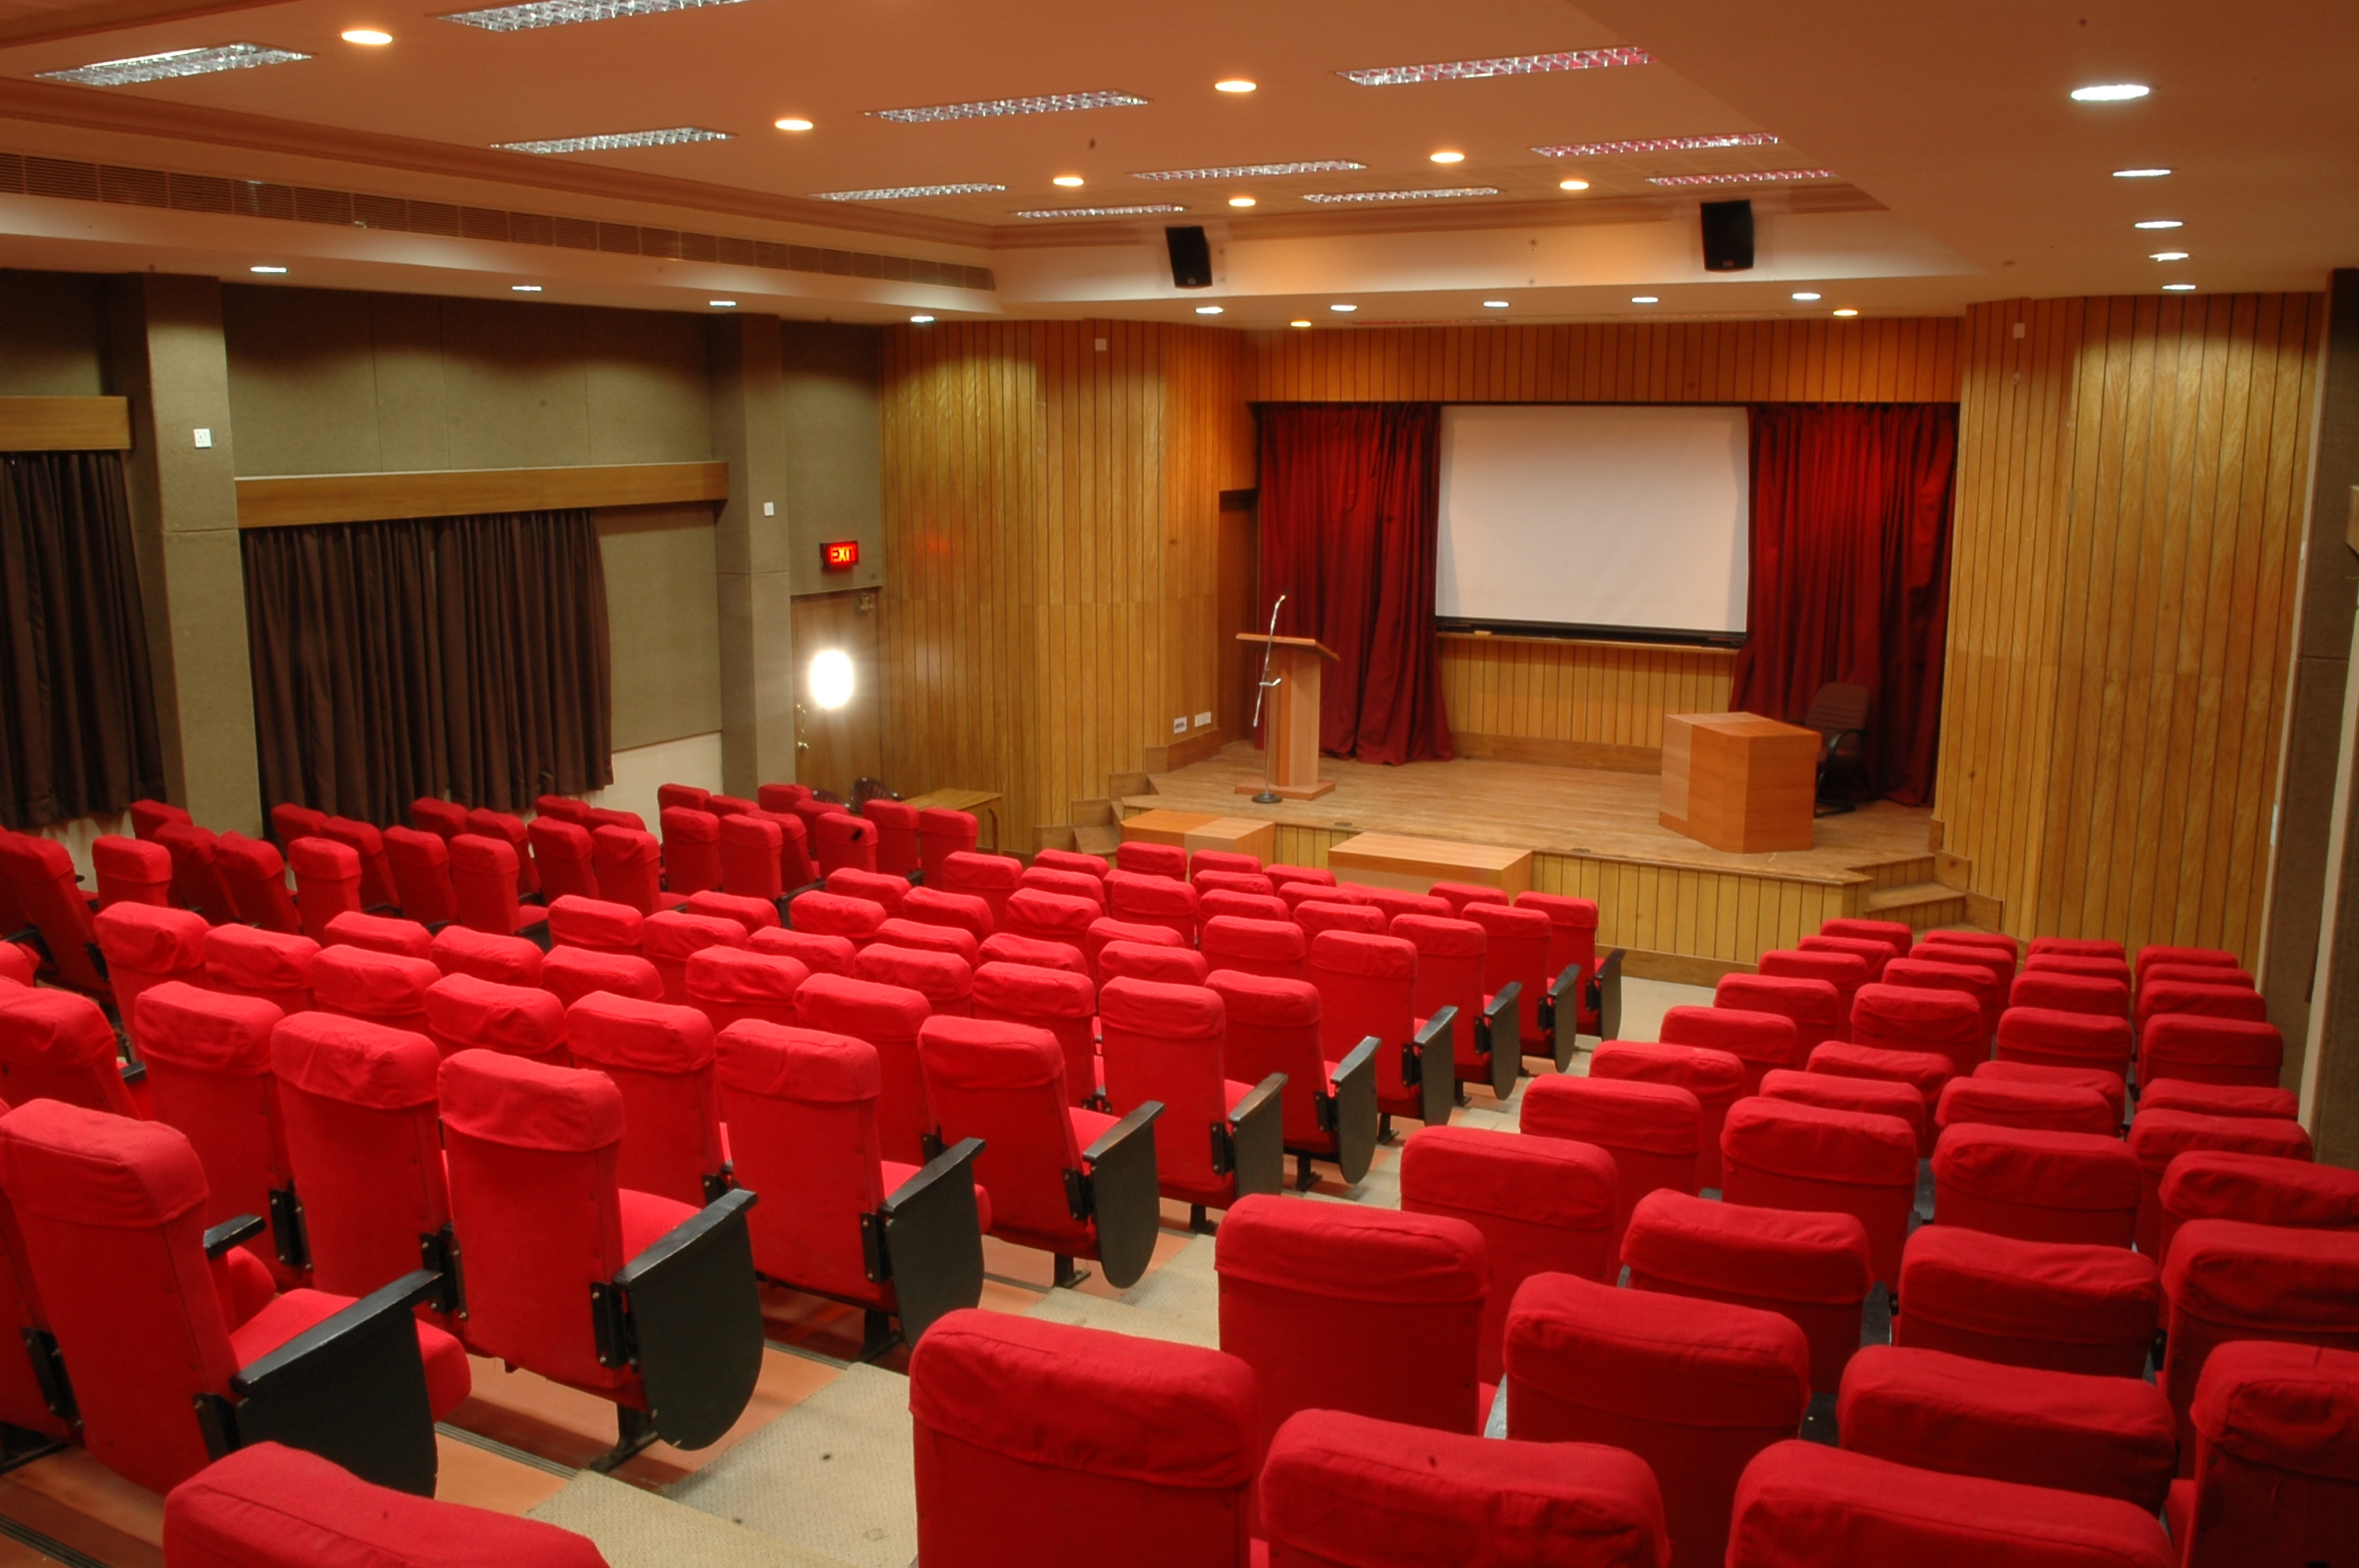 File:Auditorium.jpg - Wikimedia Commons